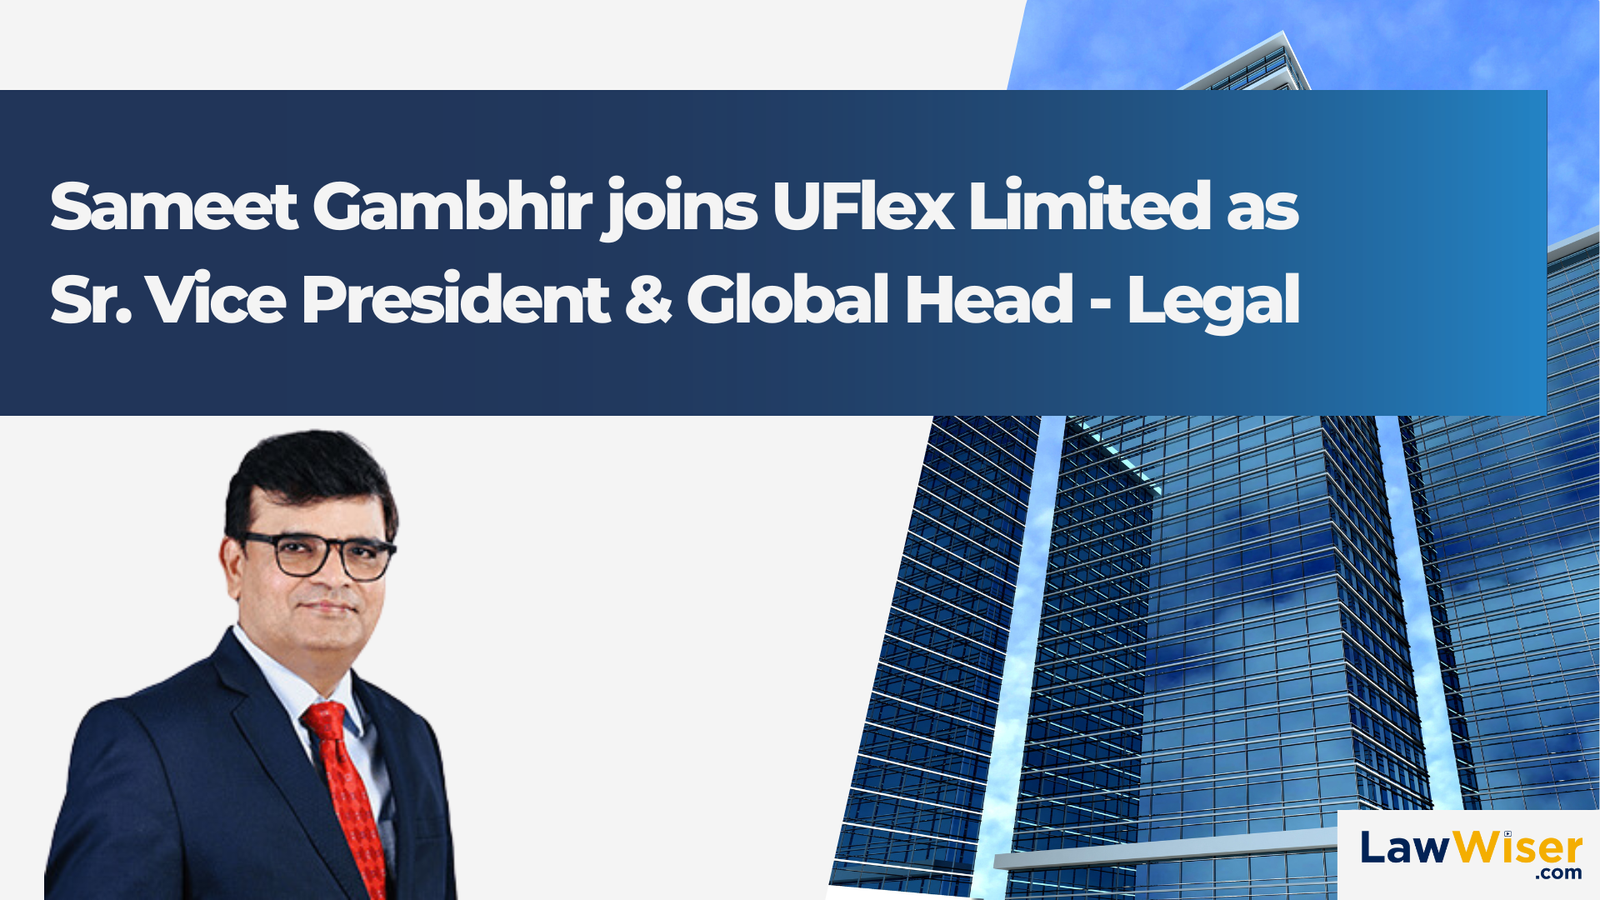 Sameet Gambhir Joins UFlex Limited as Sr. Vice President & Global Head - Legal